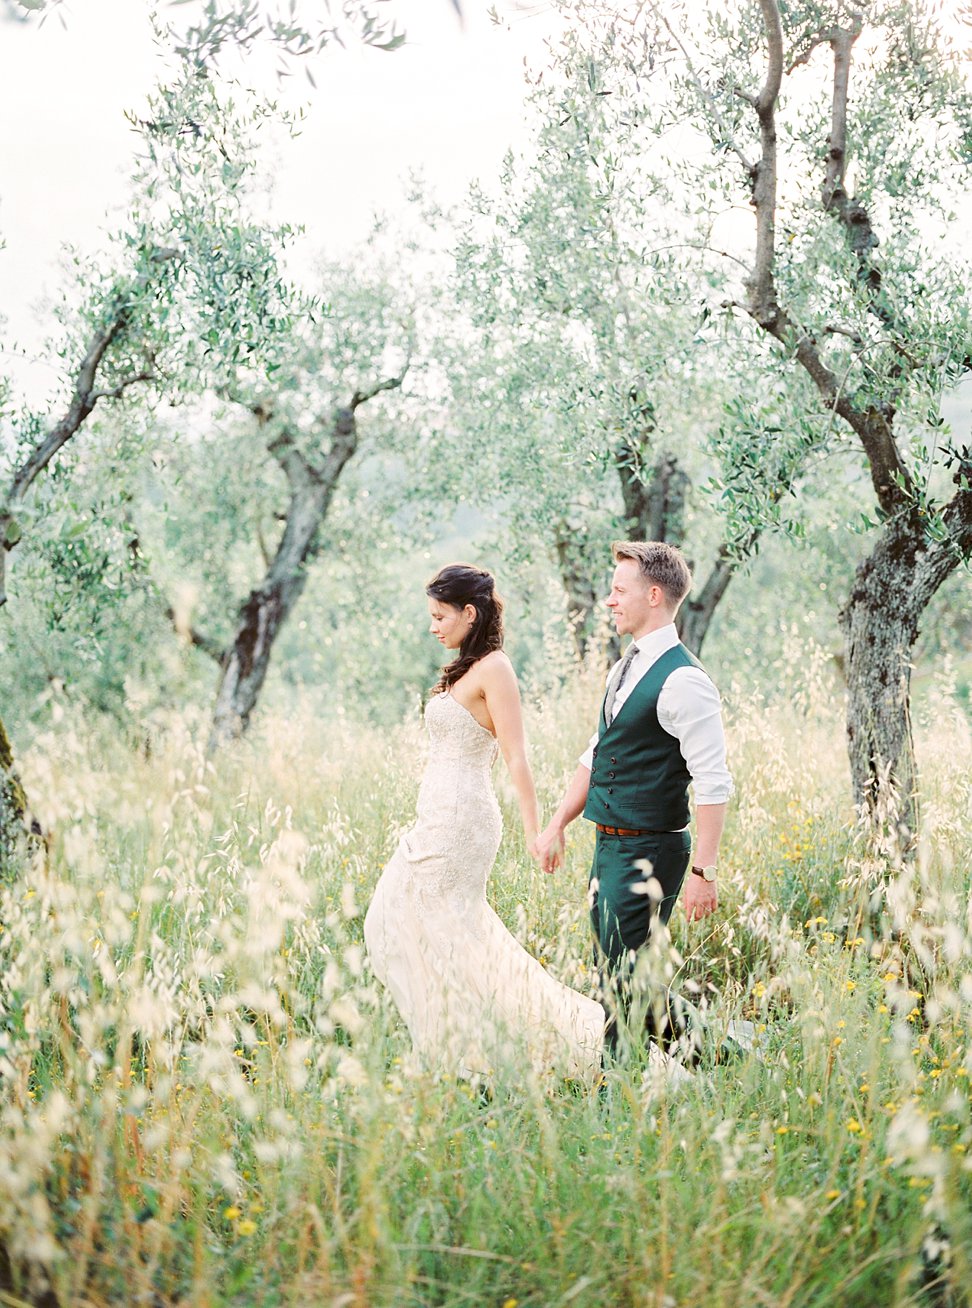 Amanda-Drost-photography-wedding-italy-Villa-sermolli-tuscany_0031.jpg